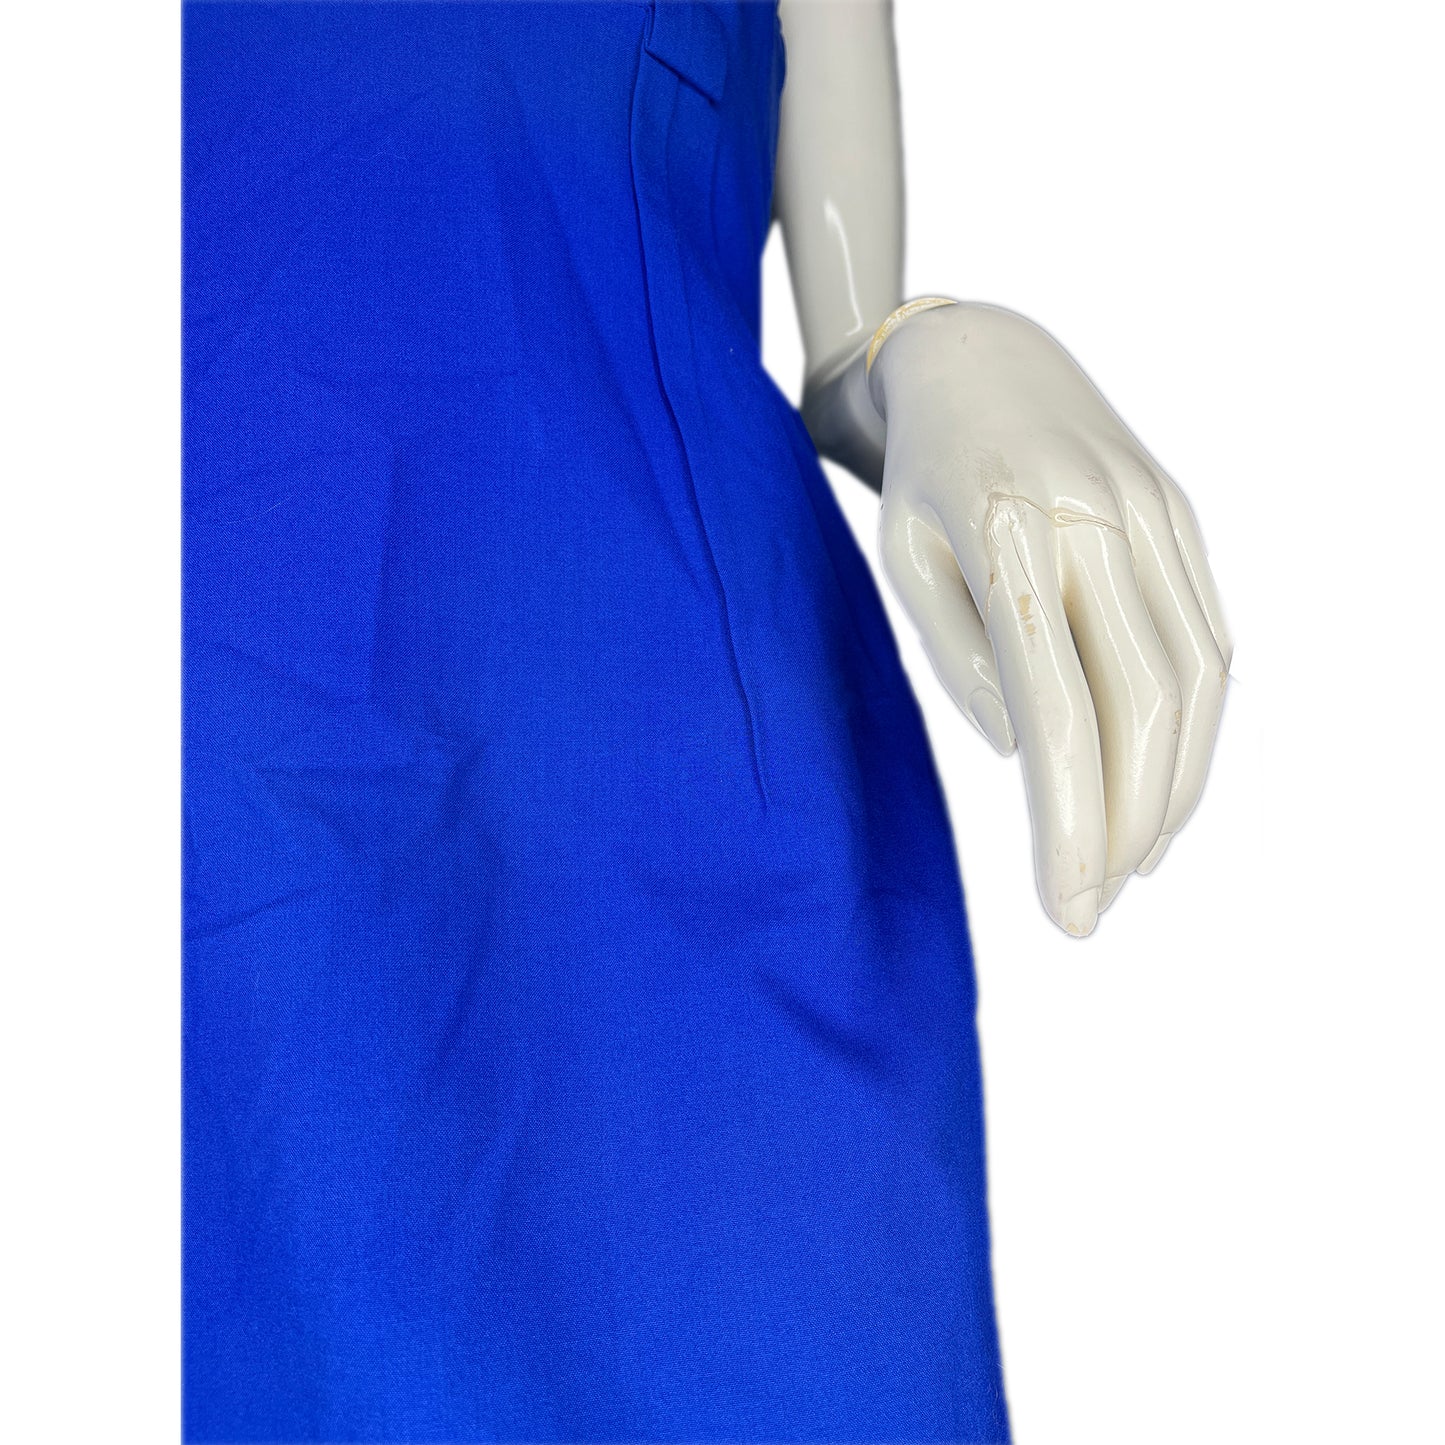 Calvin Klein Dress Cap Sleeve Above-Knee Blue Size 4 SKU 000078-3